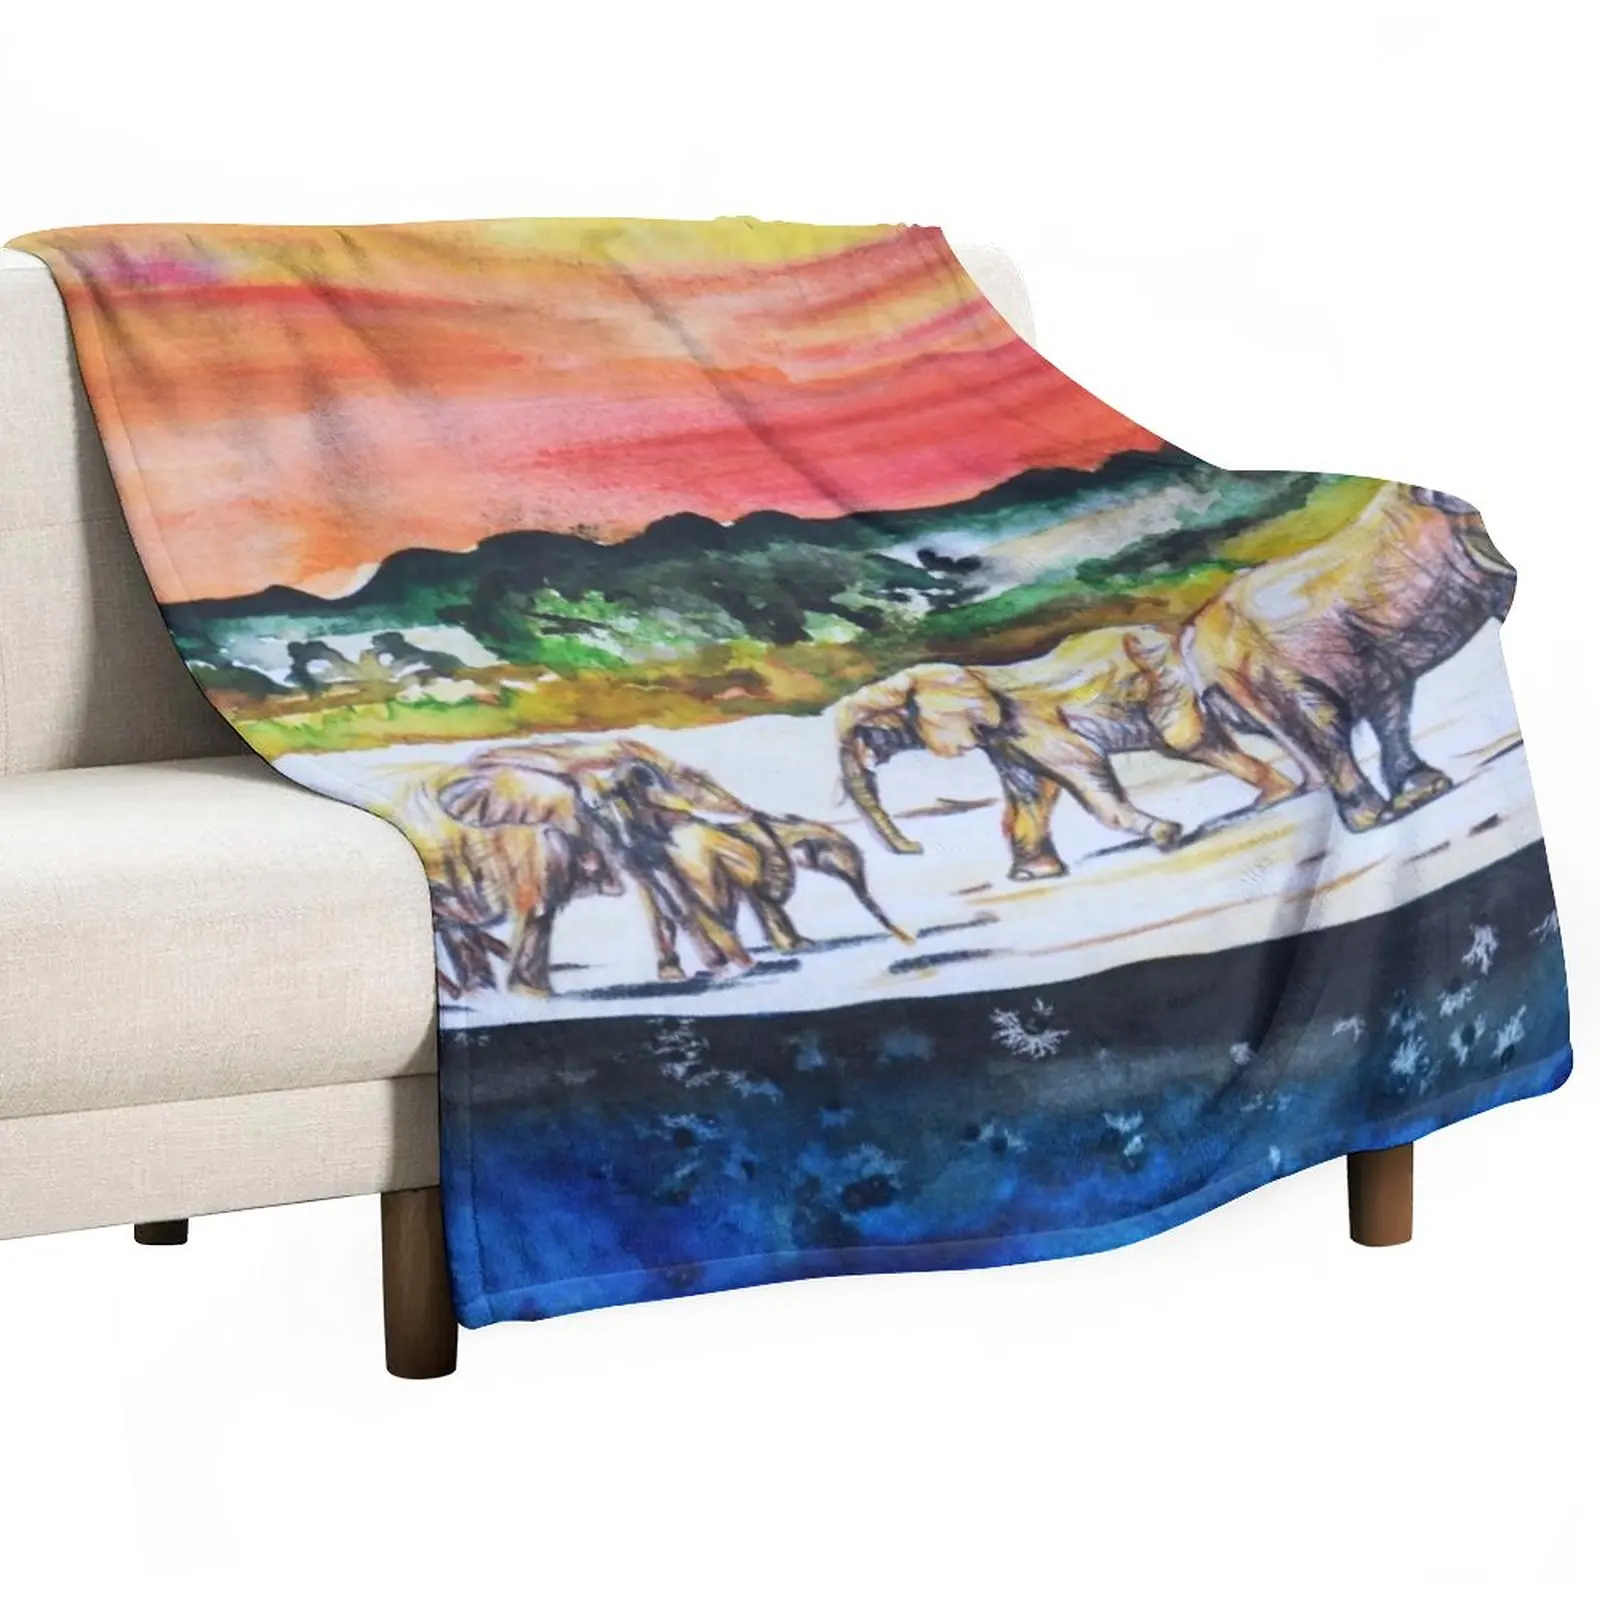 

New Elephant Herd Throw Blanket Blanket Sofa Luxury Thicken Blanket manga Nap Blanket